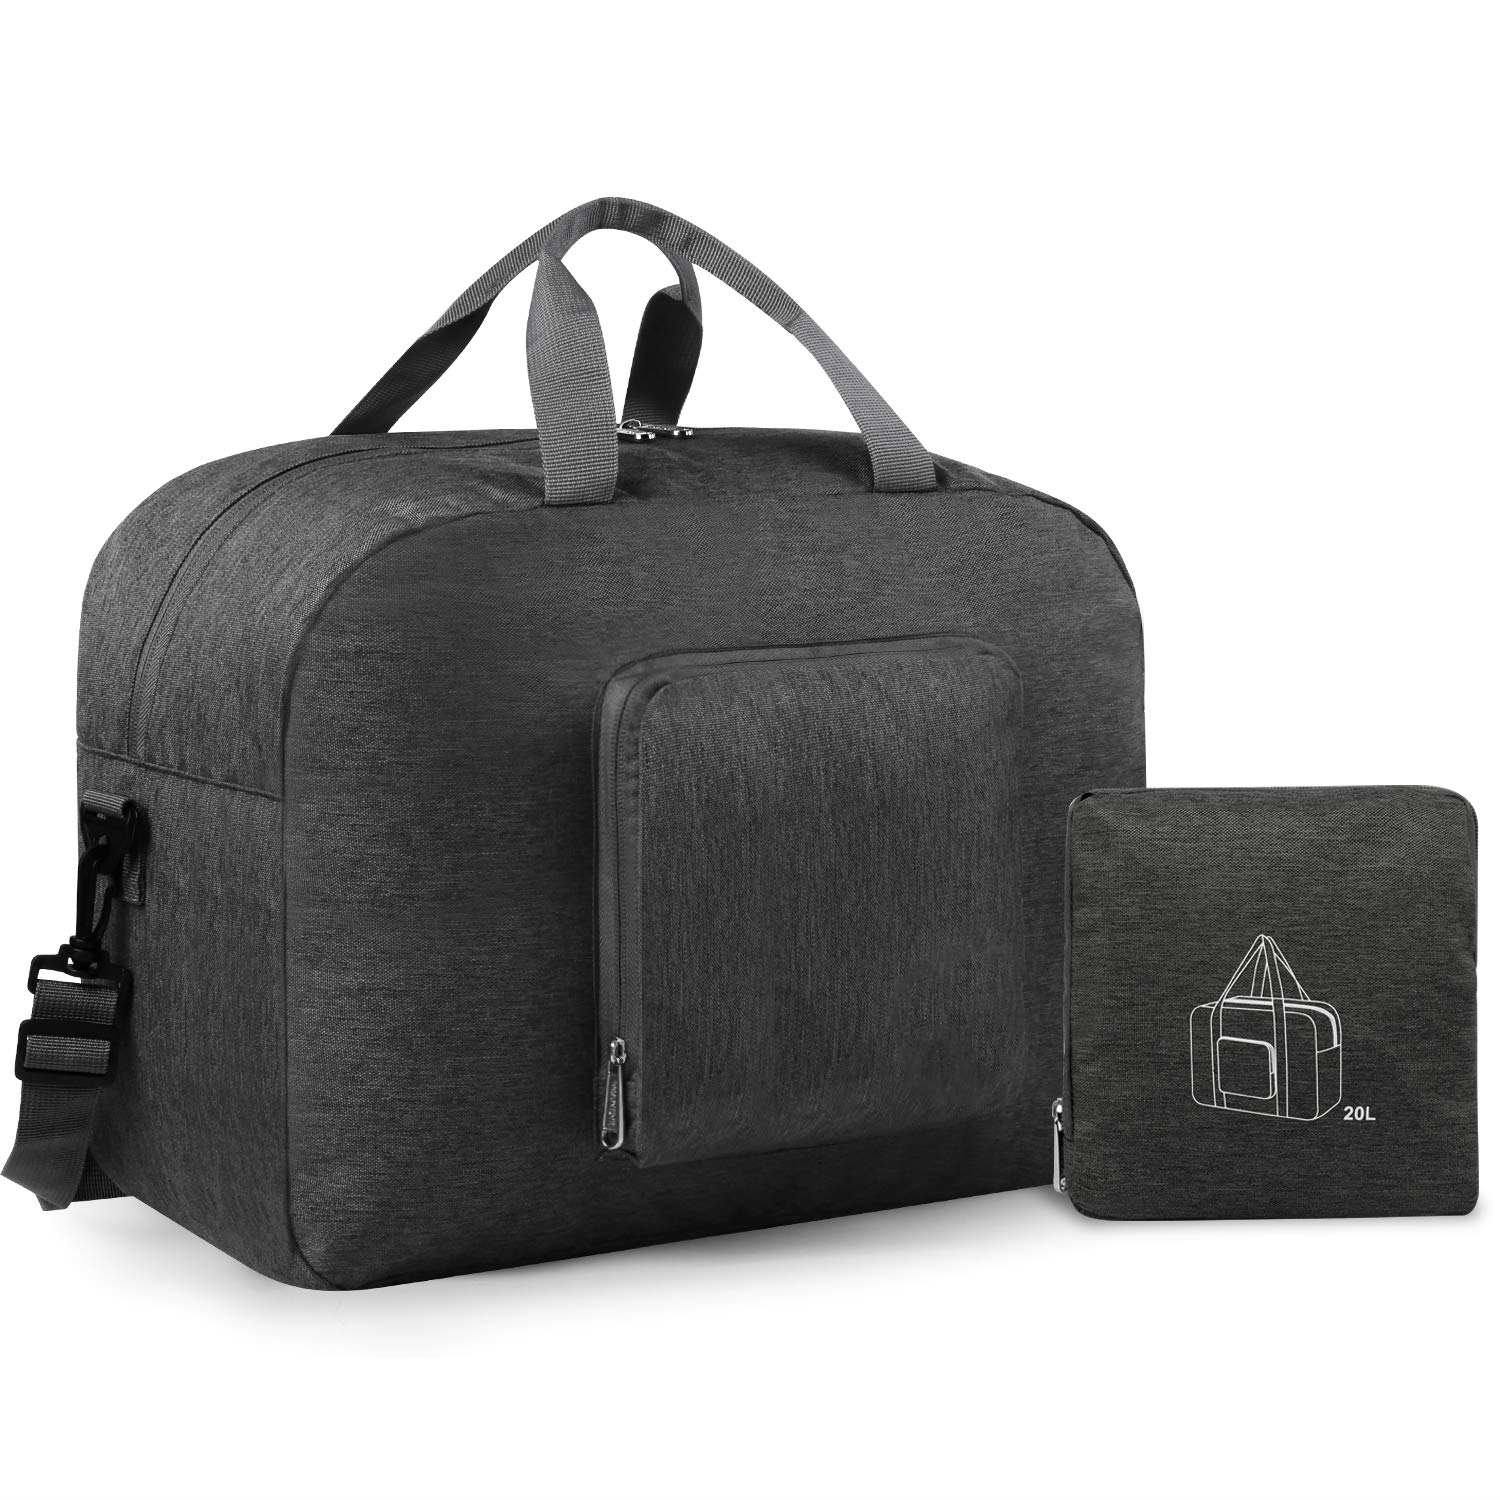 Foldable Travel Duffel Bag Luggage Sports Gym Water Resistant Nylon